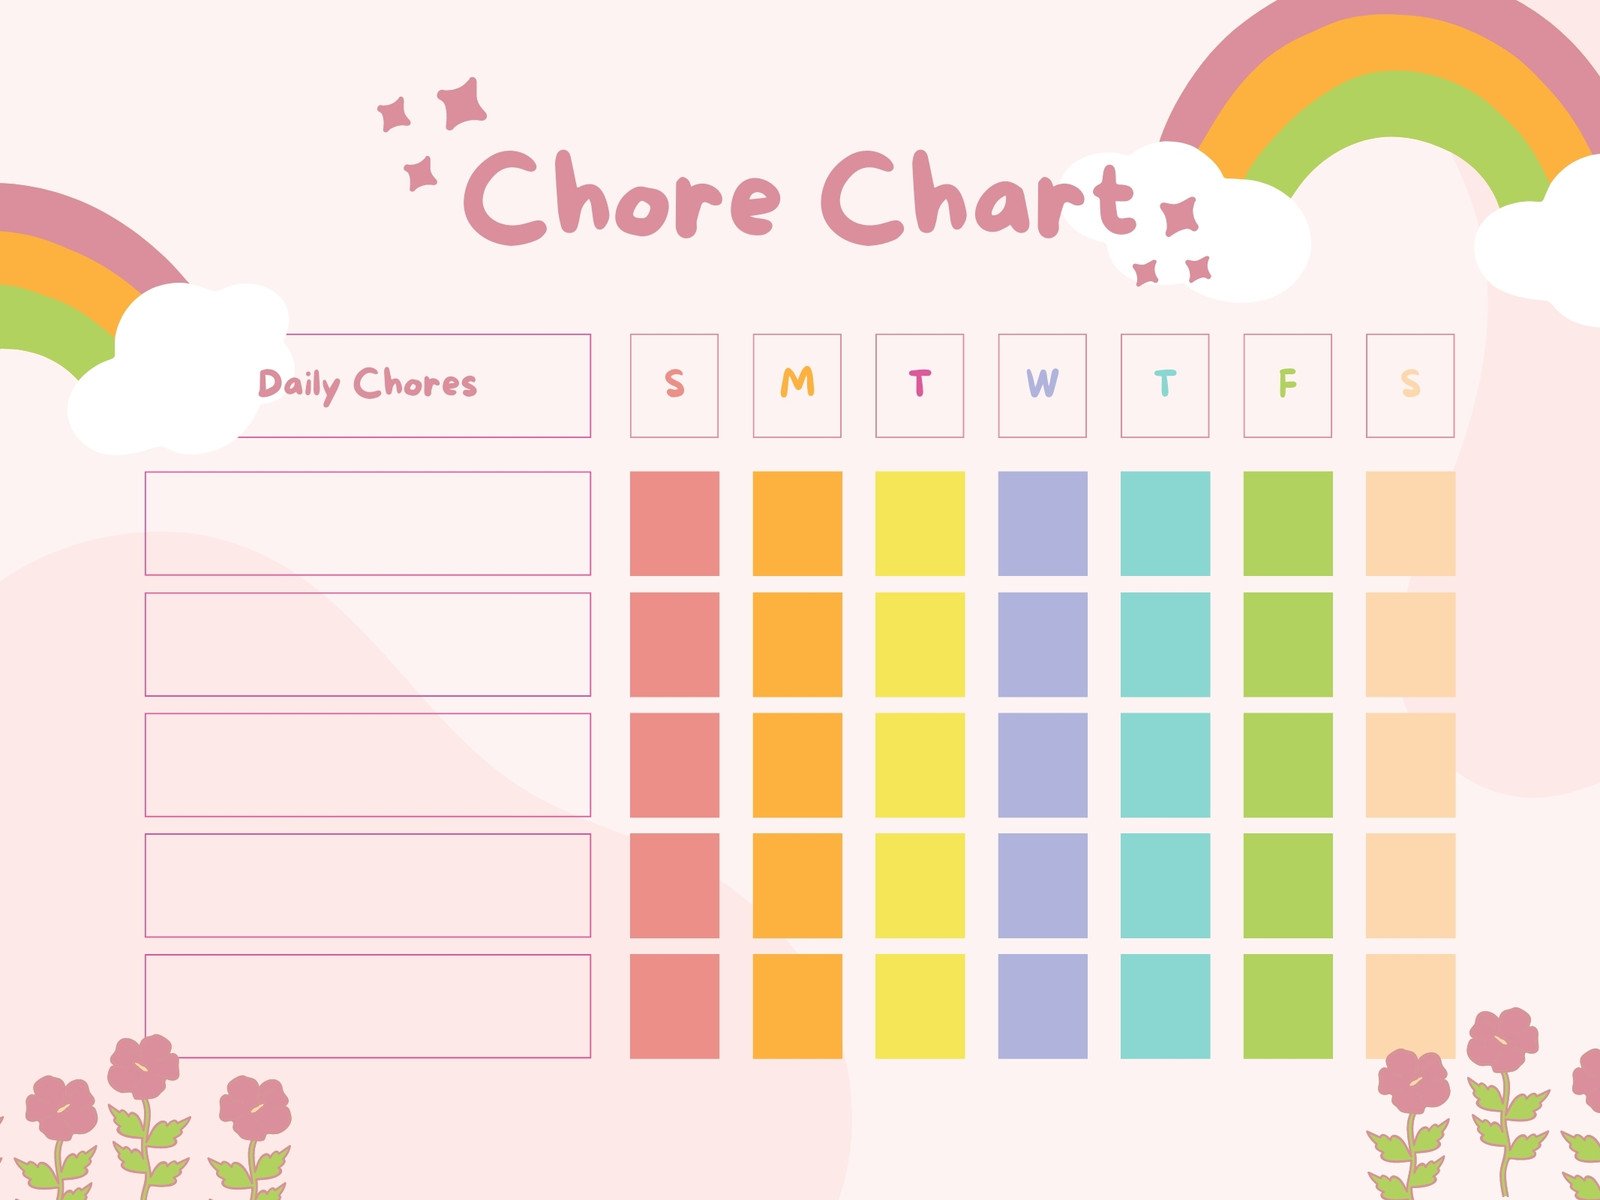 Editable Chore Cards & Chore Chart Bundle - Happy Brown House